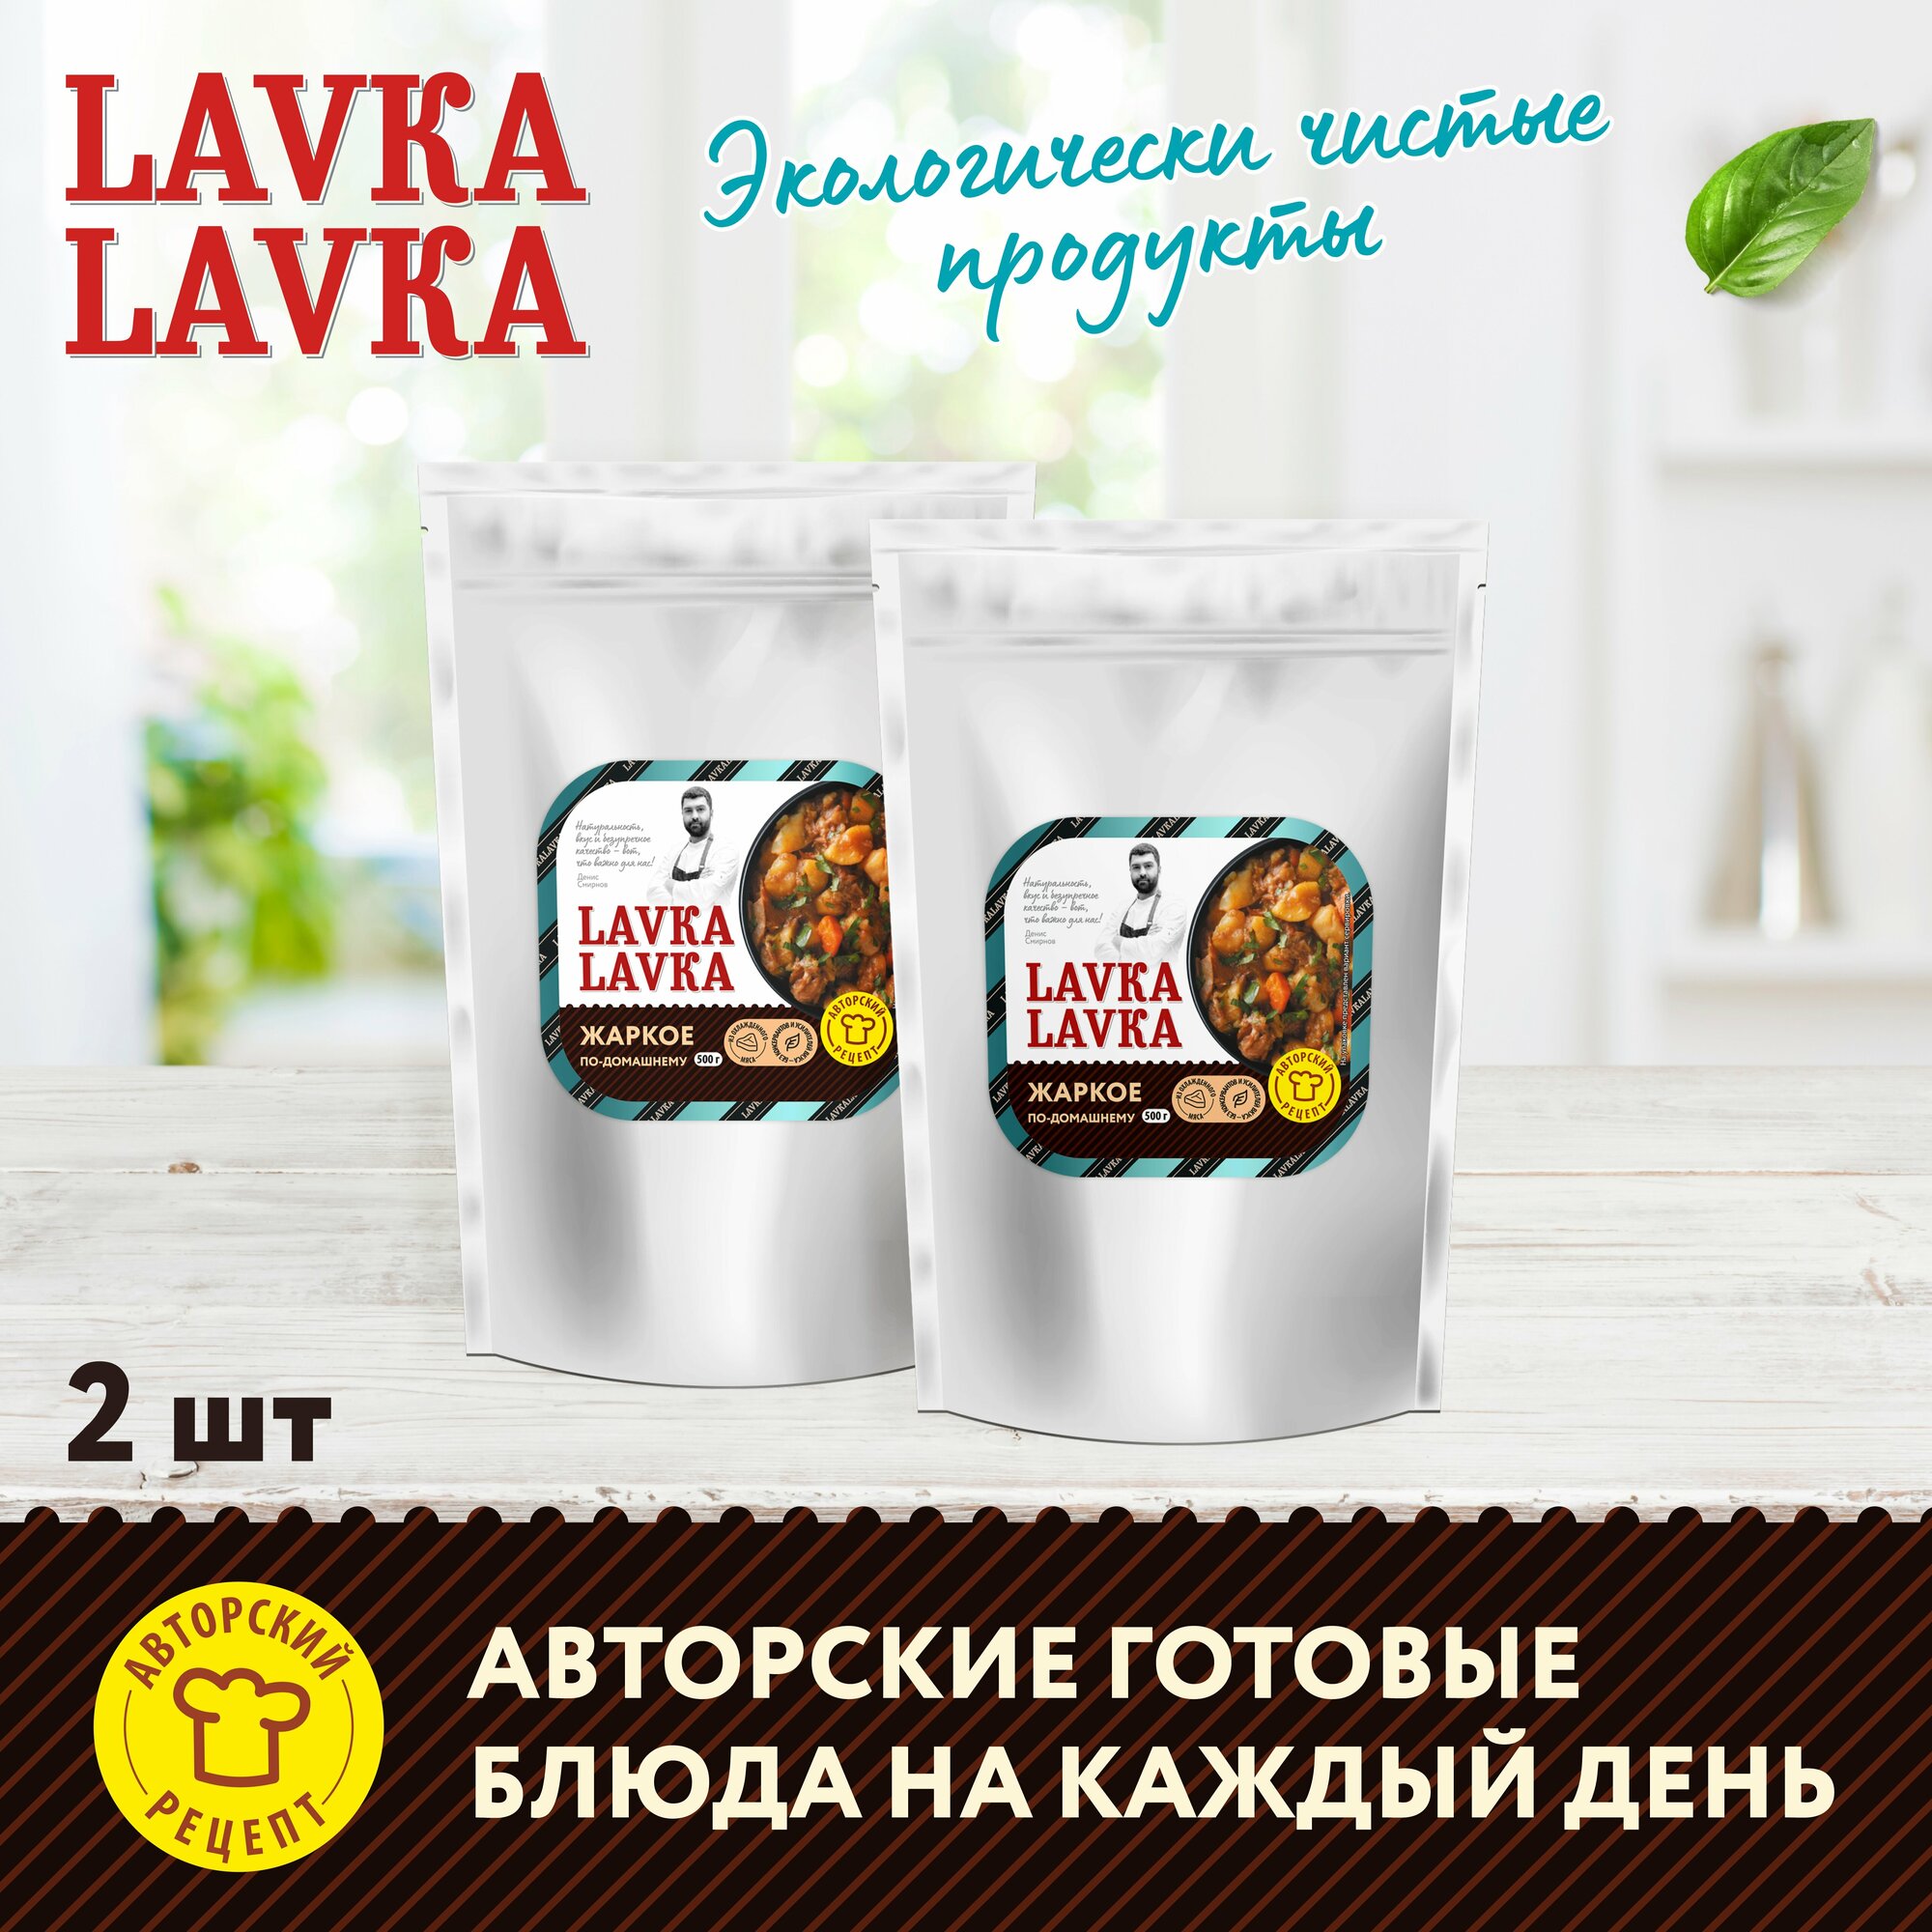 Готовая еда, Жаркое по-домашнему, 2 уп. по 500 гр. (LavkaLavka)